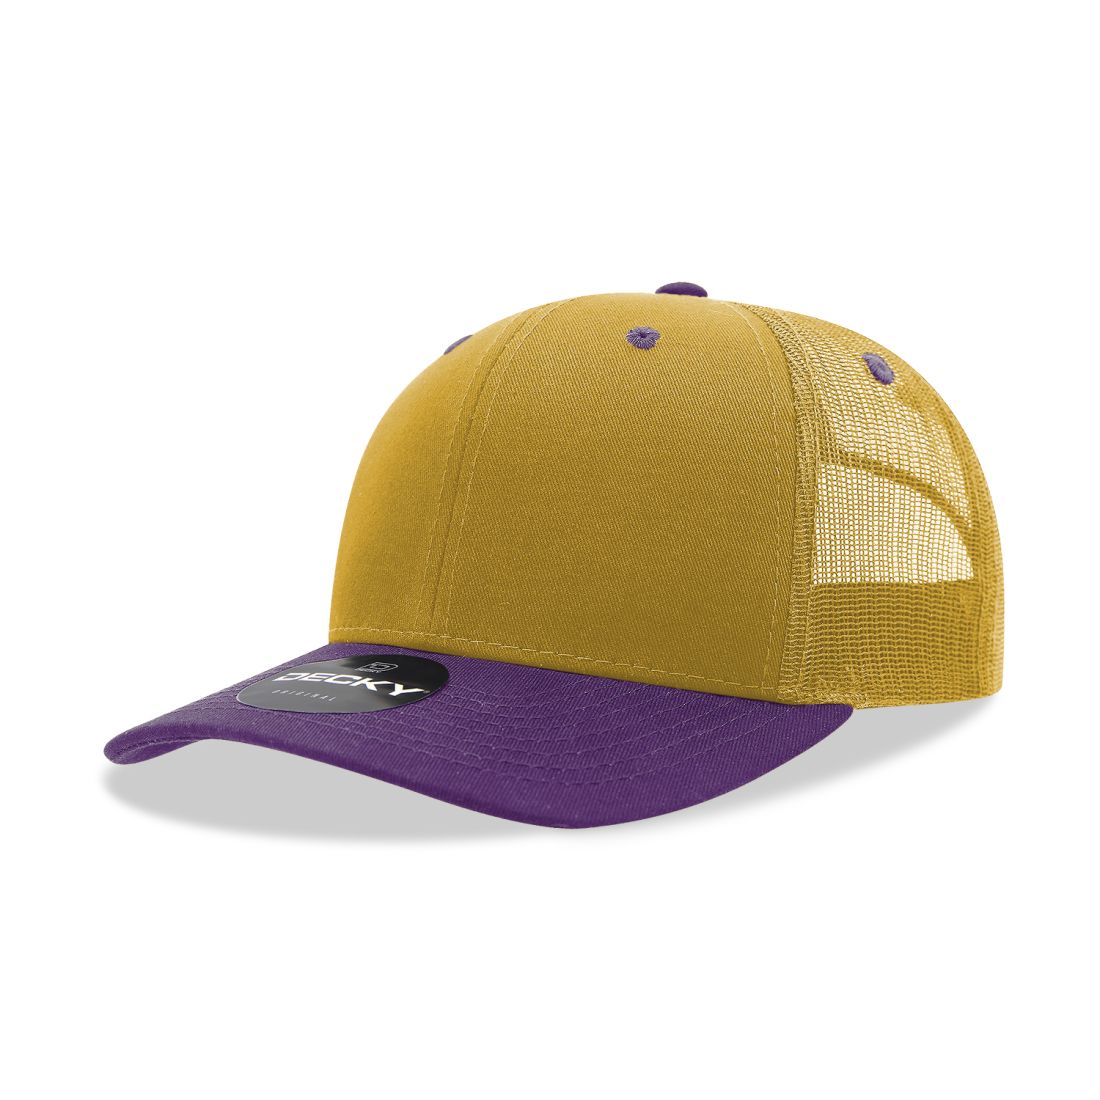 Gold/Purple color variant